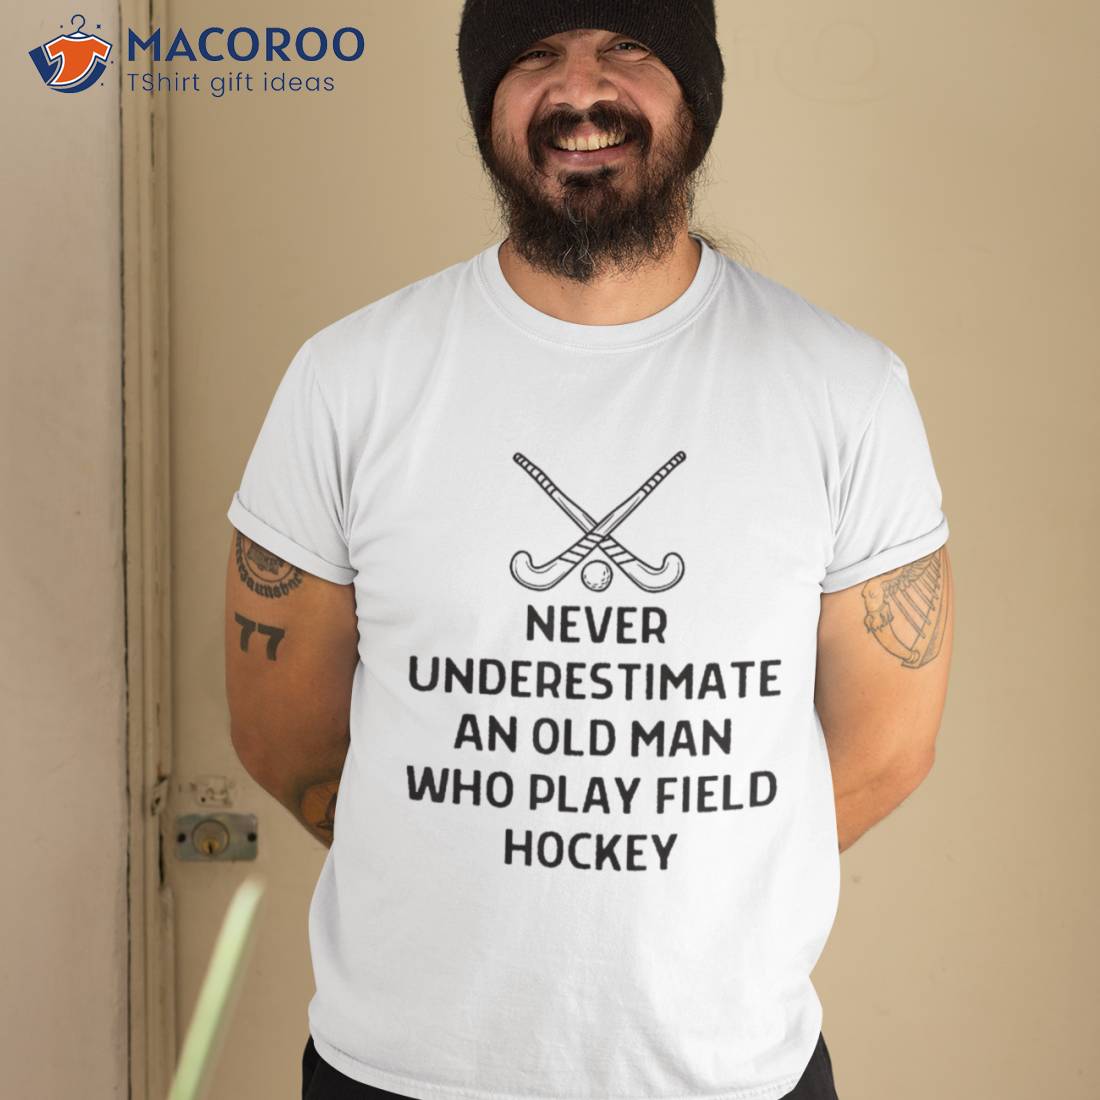 Field Hockey T-Shirts, Unique Designs